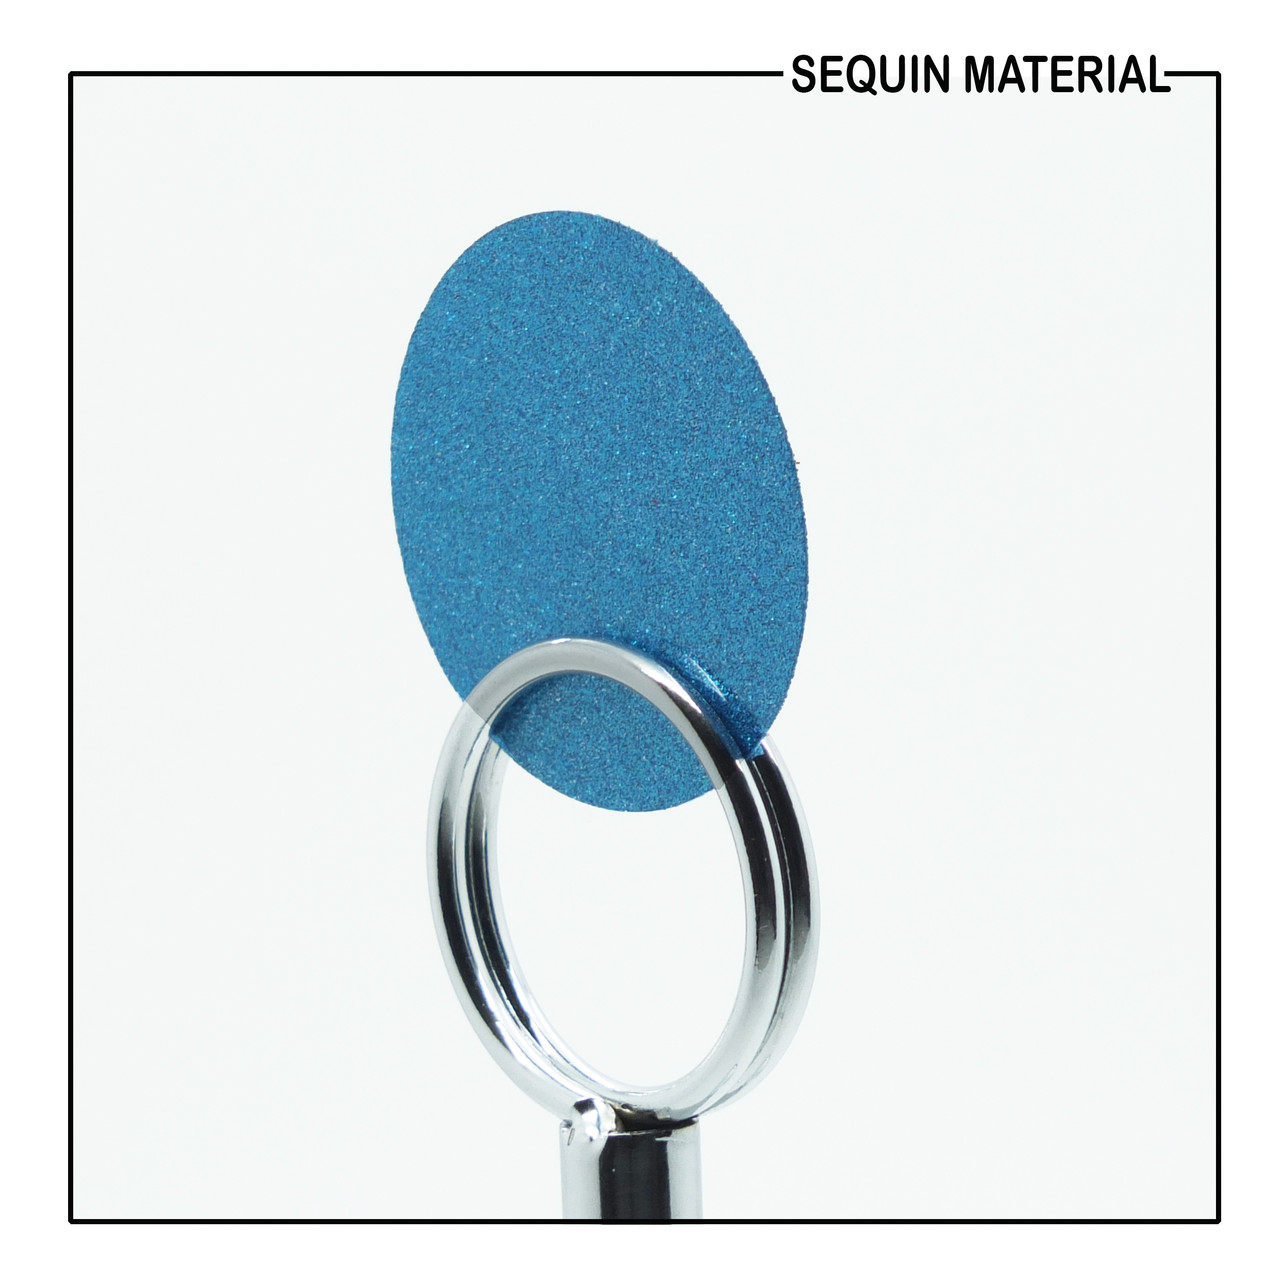 SequinsUSA Dark Turquoise Blue Sparkle Glitter Texture Sequin Material RL505